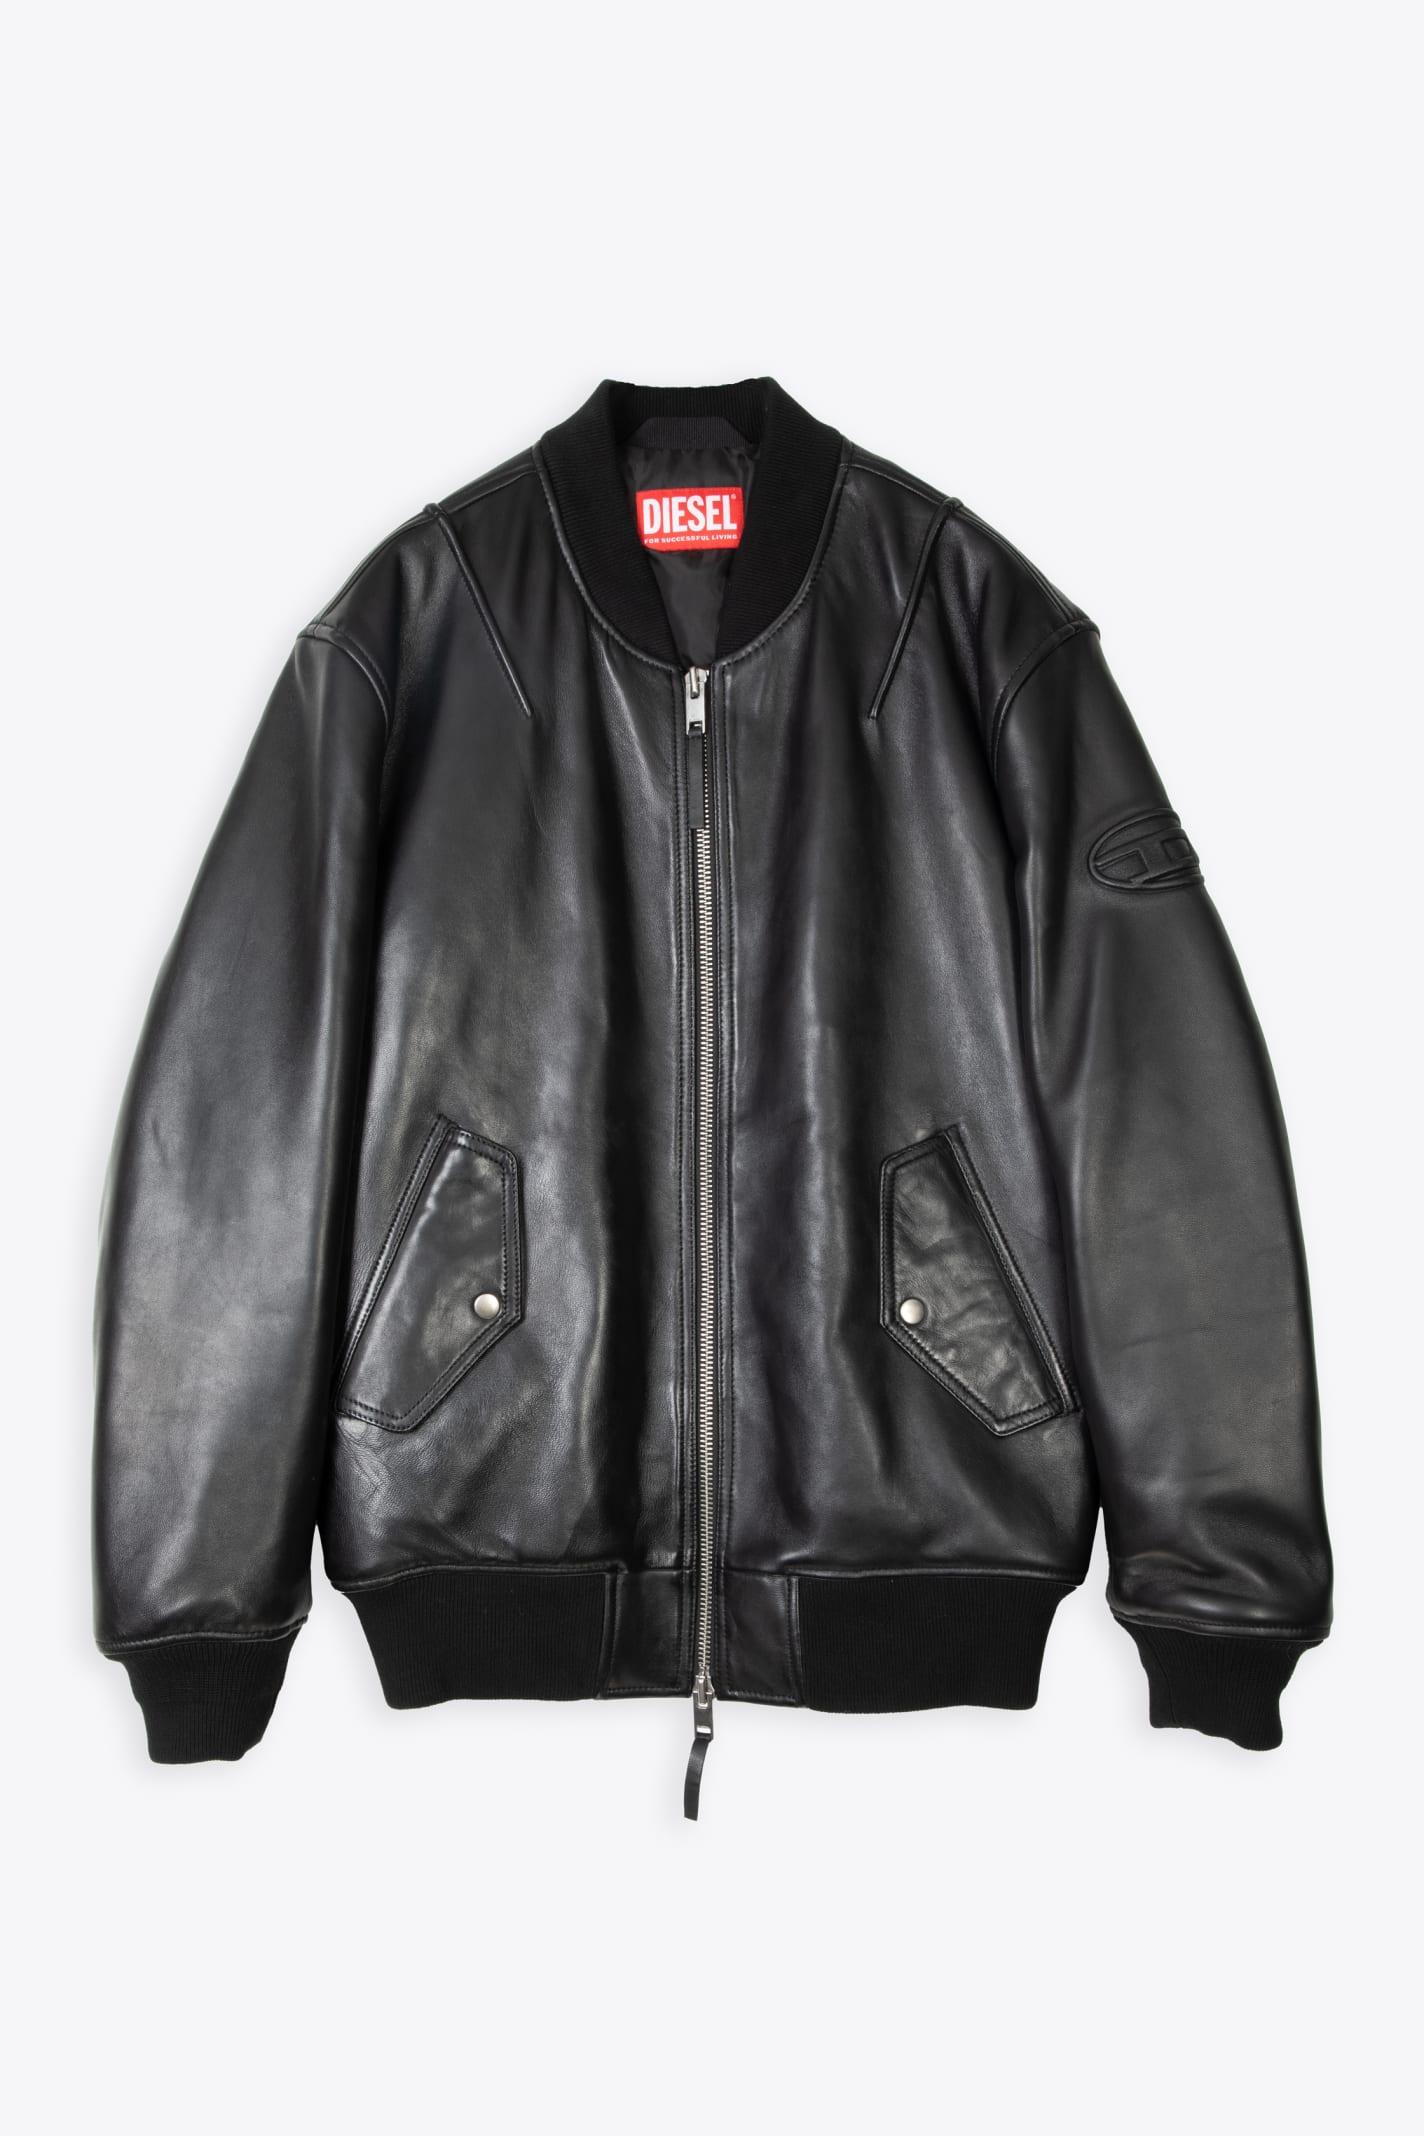 DIESEL L-pritts Giacca Black Leather Bomber Jacket - L Pritts for Men | Lyst